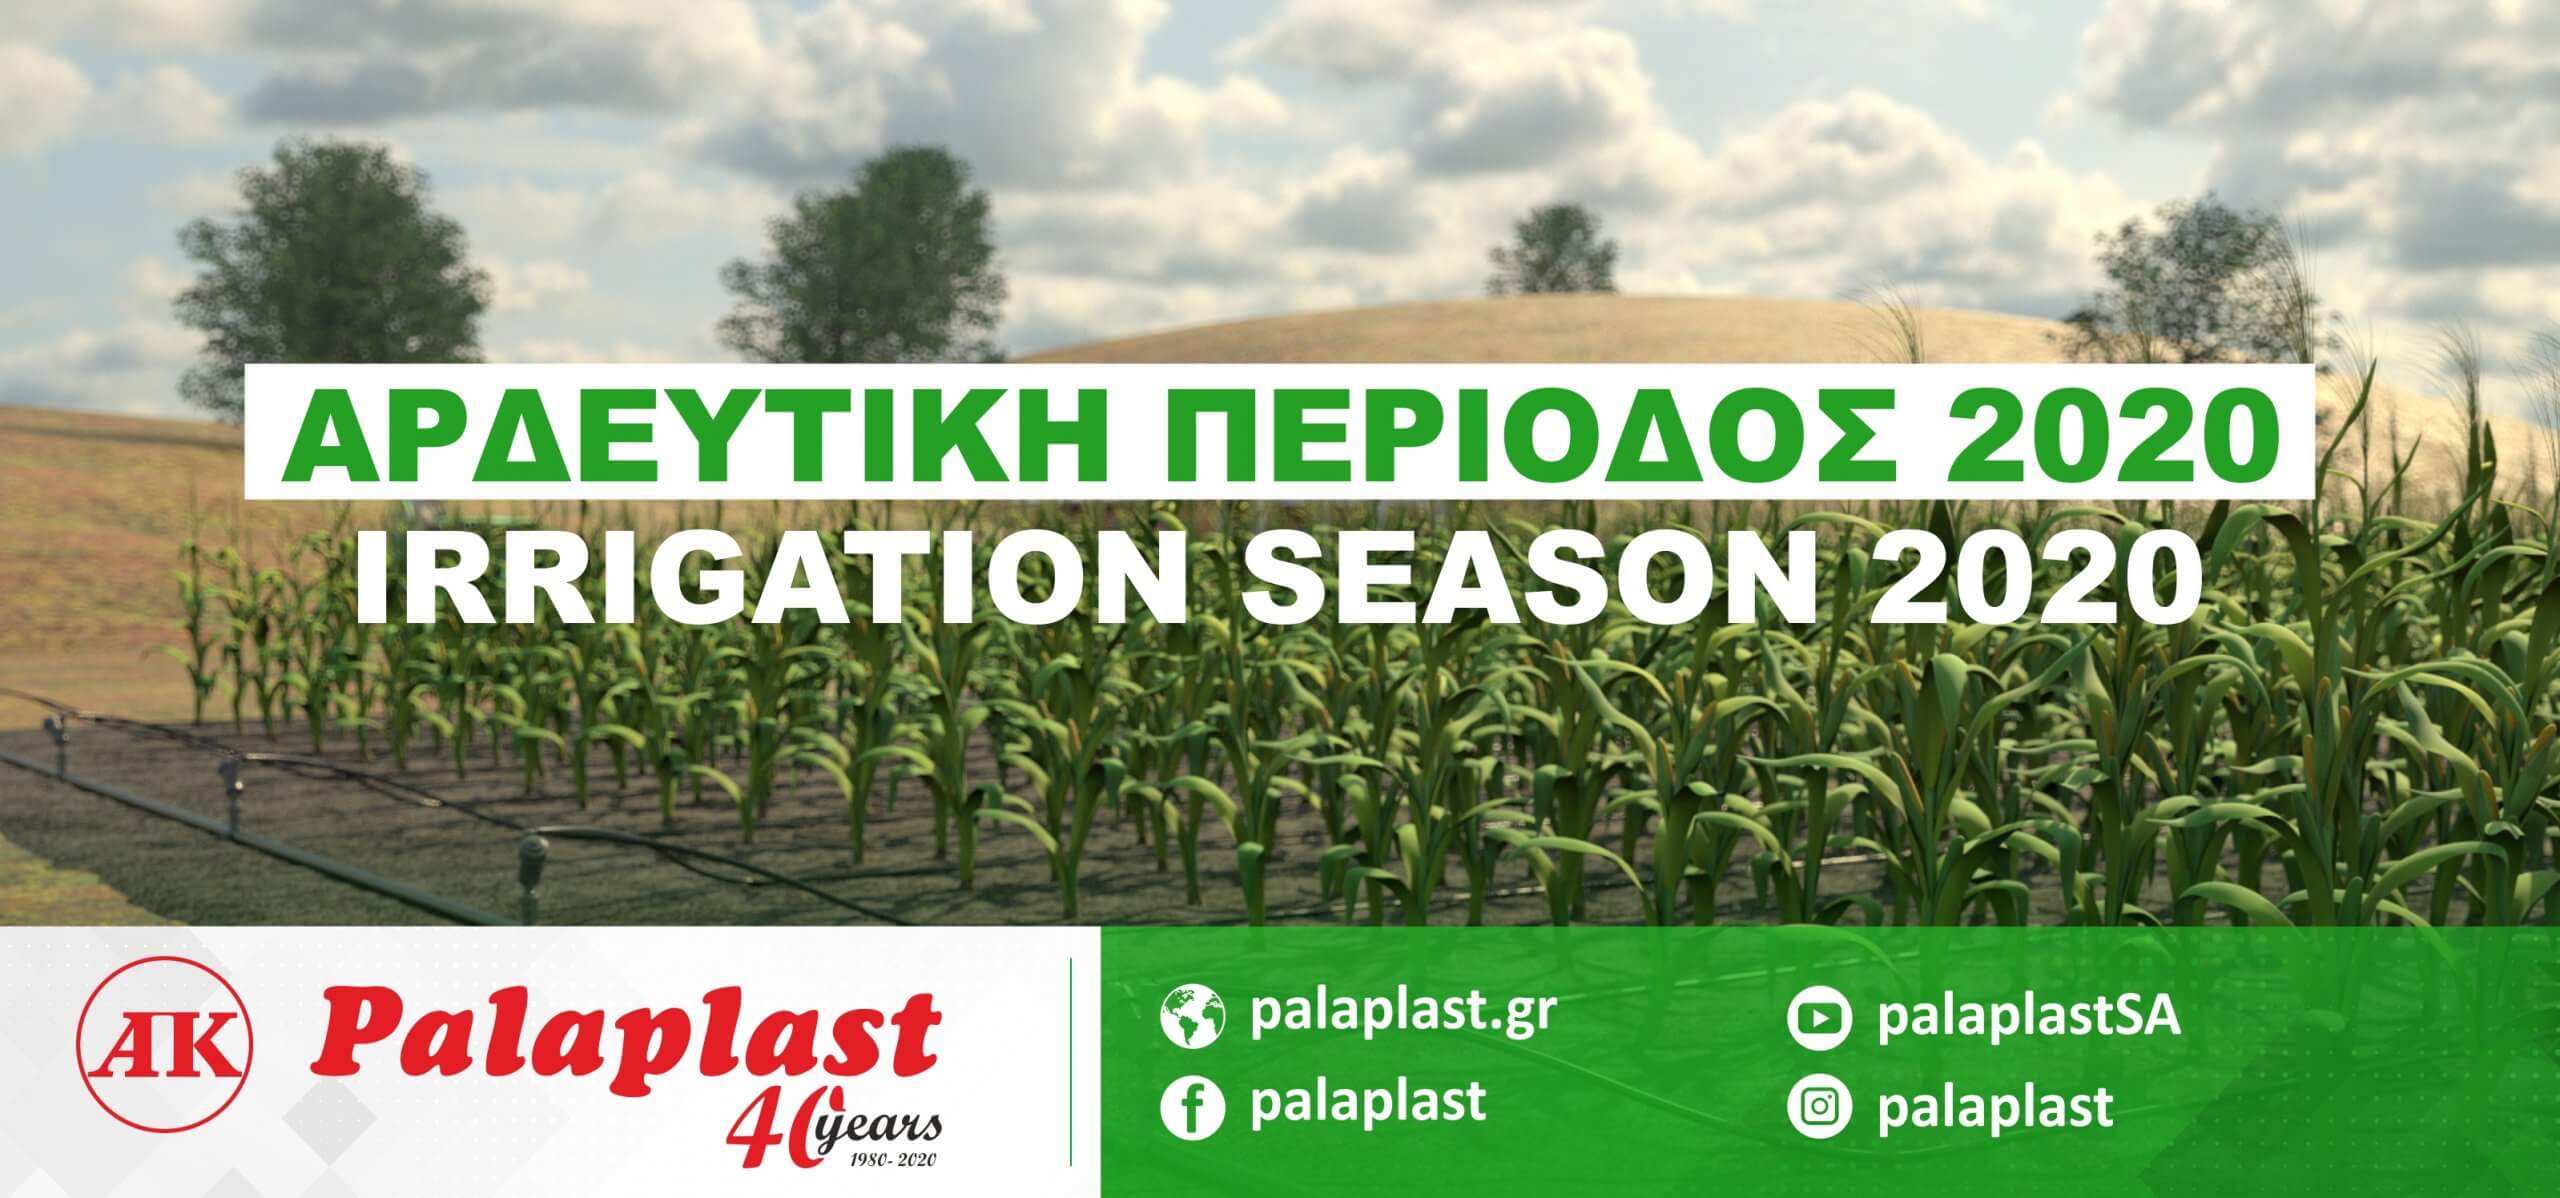 Irrigation season 2020 - Αρδευτική Περίοδος 2020